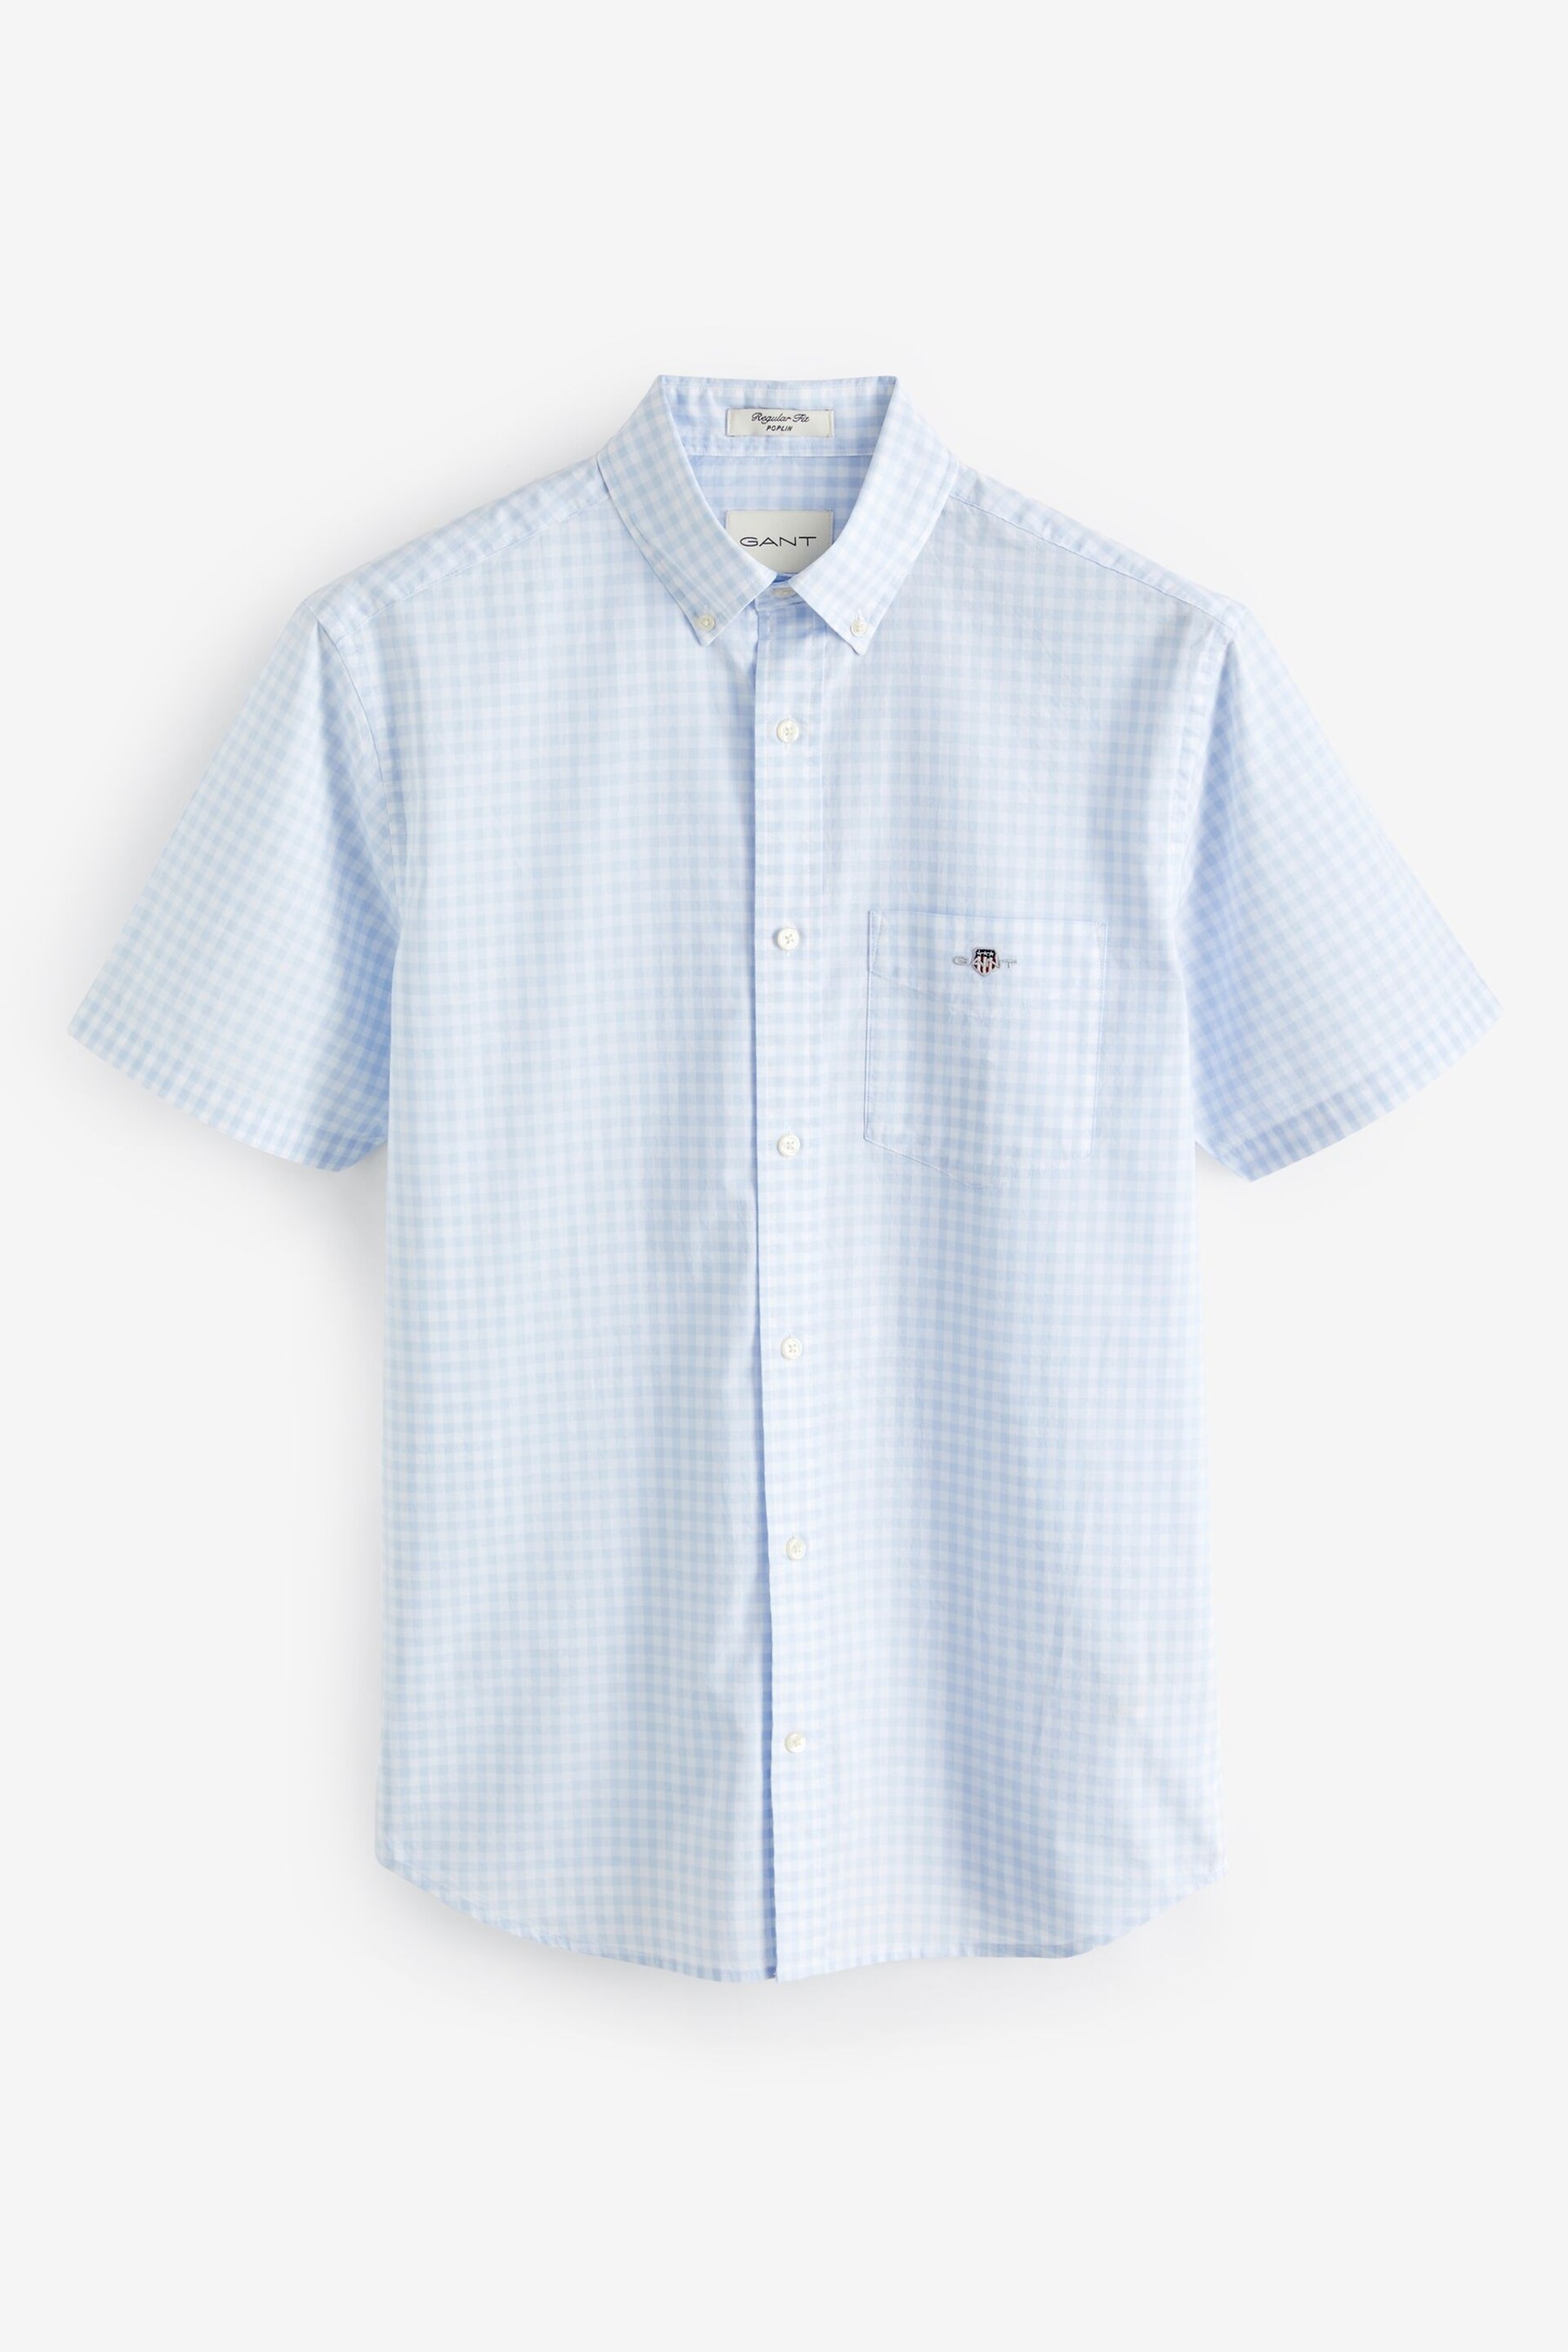 GANT Blue Regular Fit Gingham Poplin Short Sleeve Shirt - Image 5 of 5